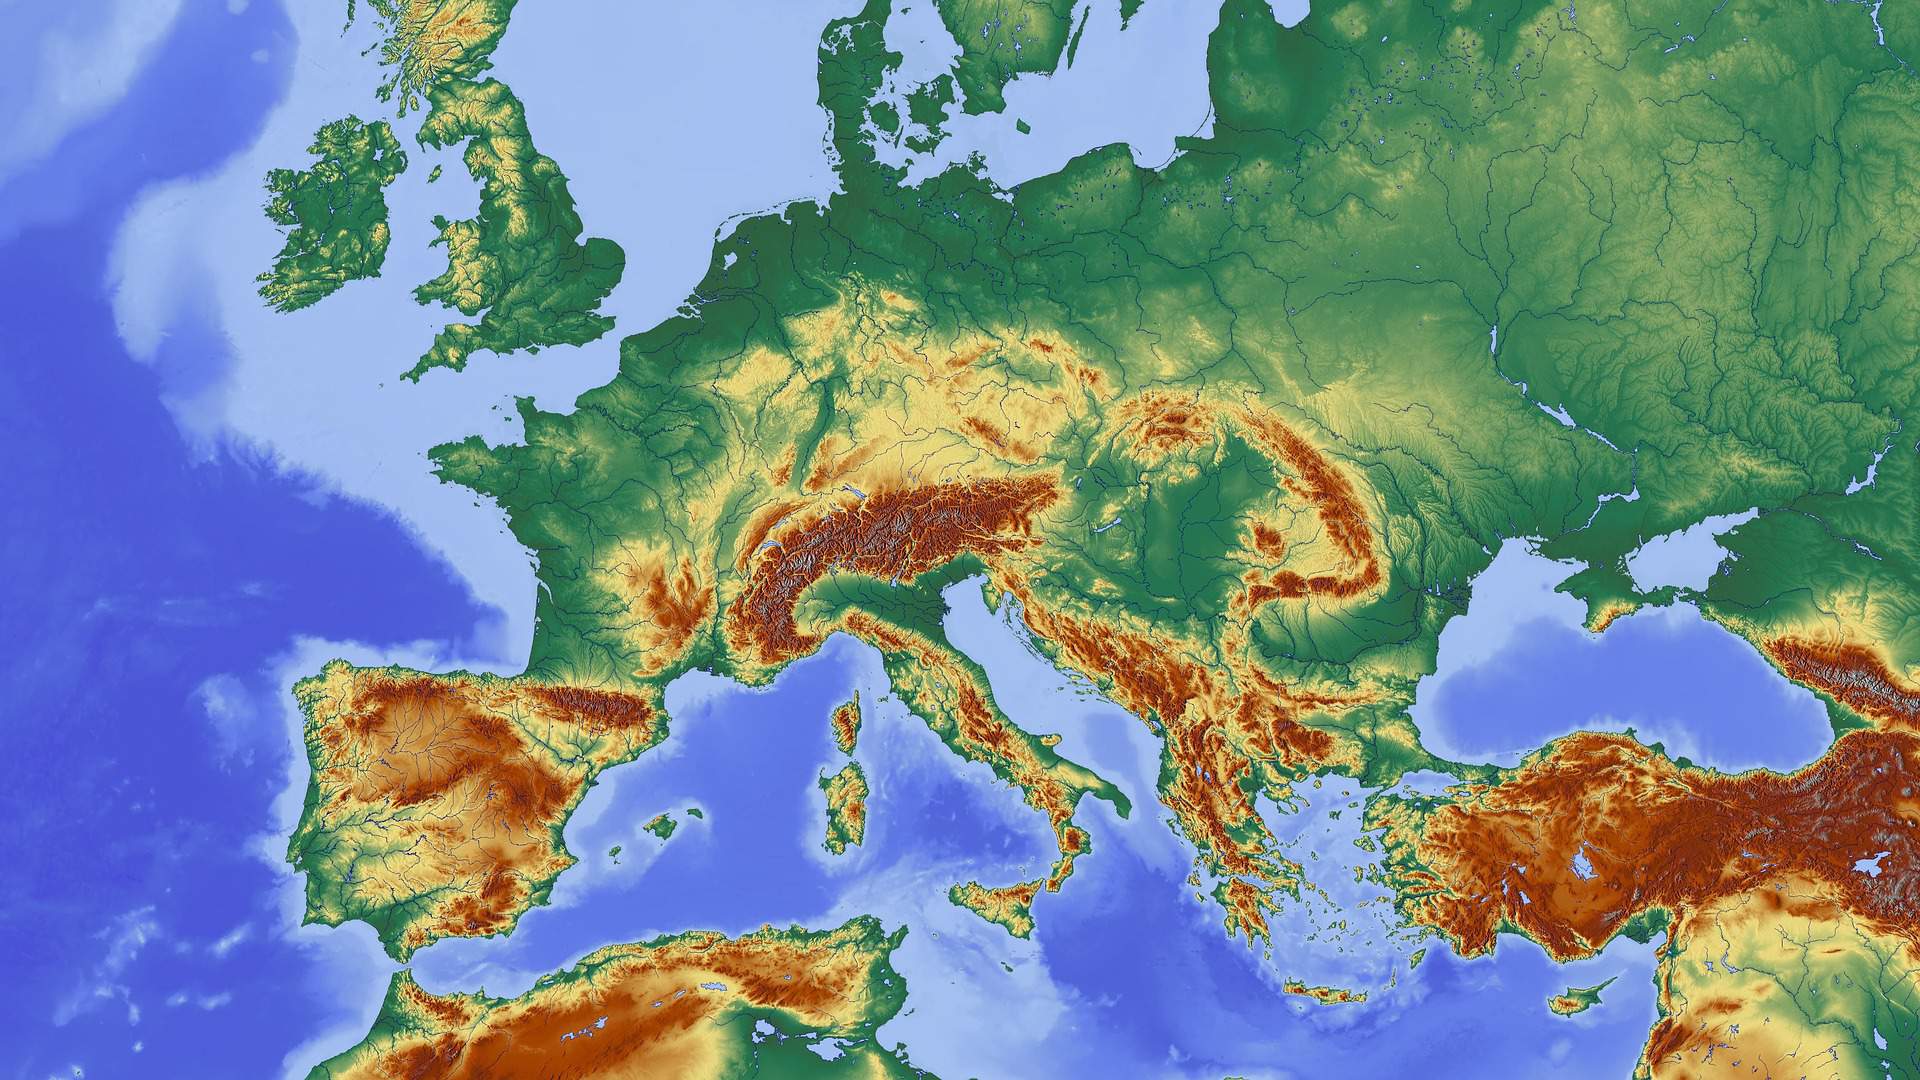 Europa, Erde, Geographie